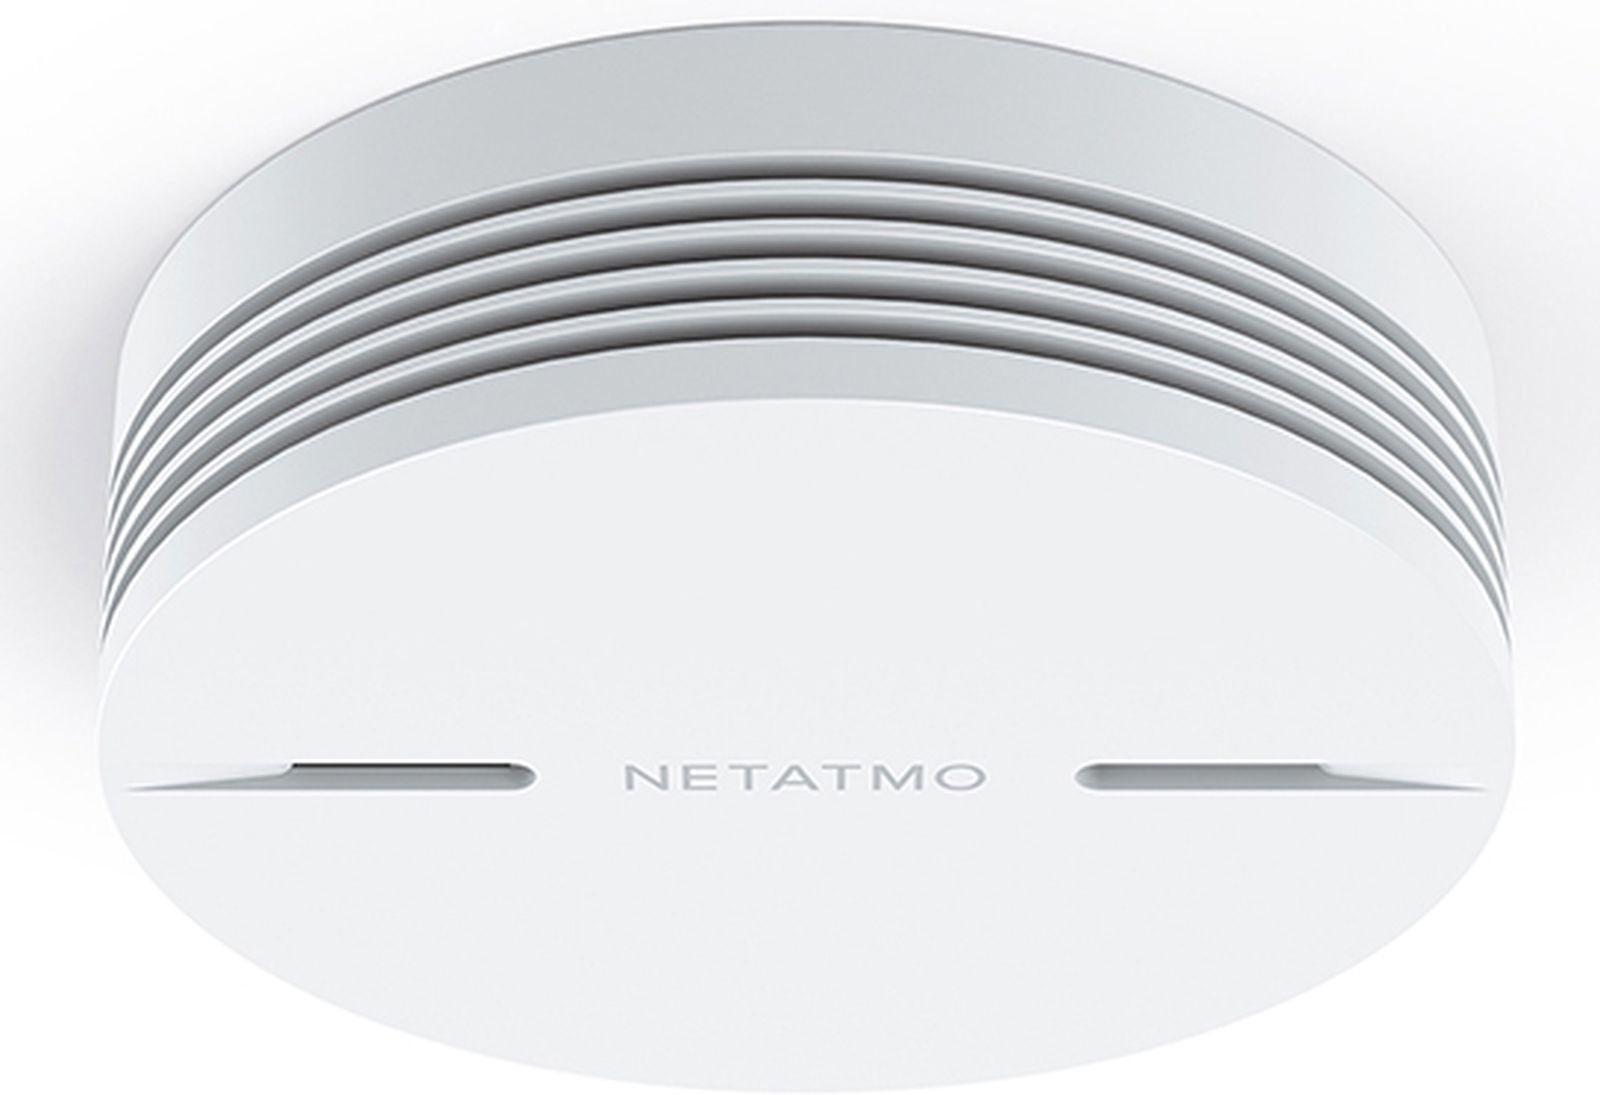 CES 2017: Netatmo Debuts HomeKit-Enabled Smart Smoke Alarm - MacRumors